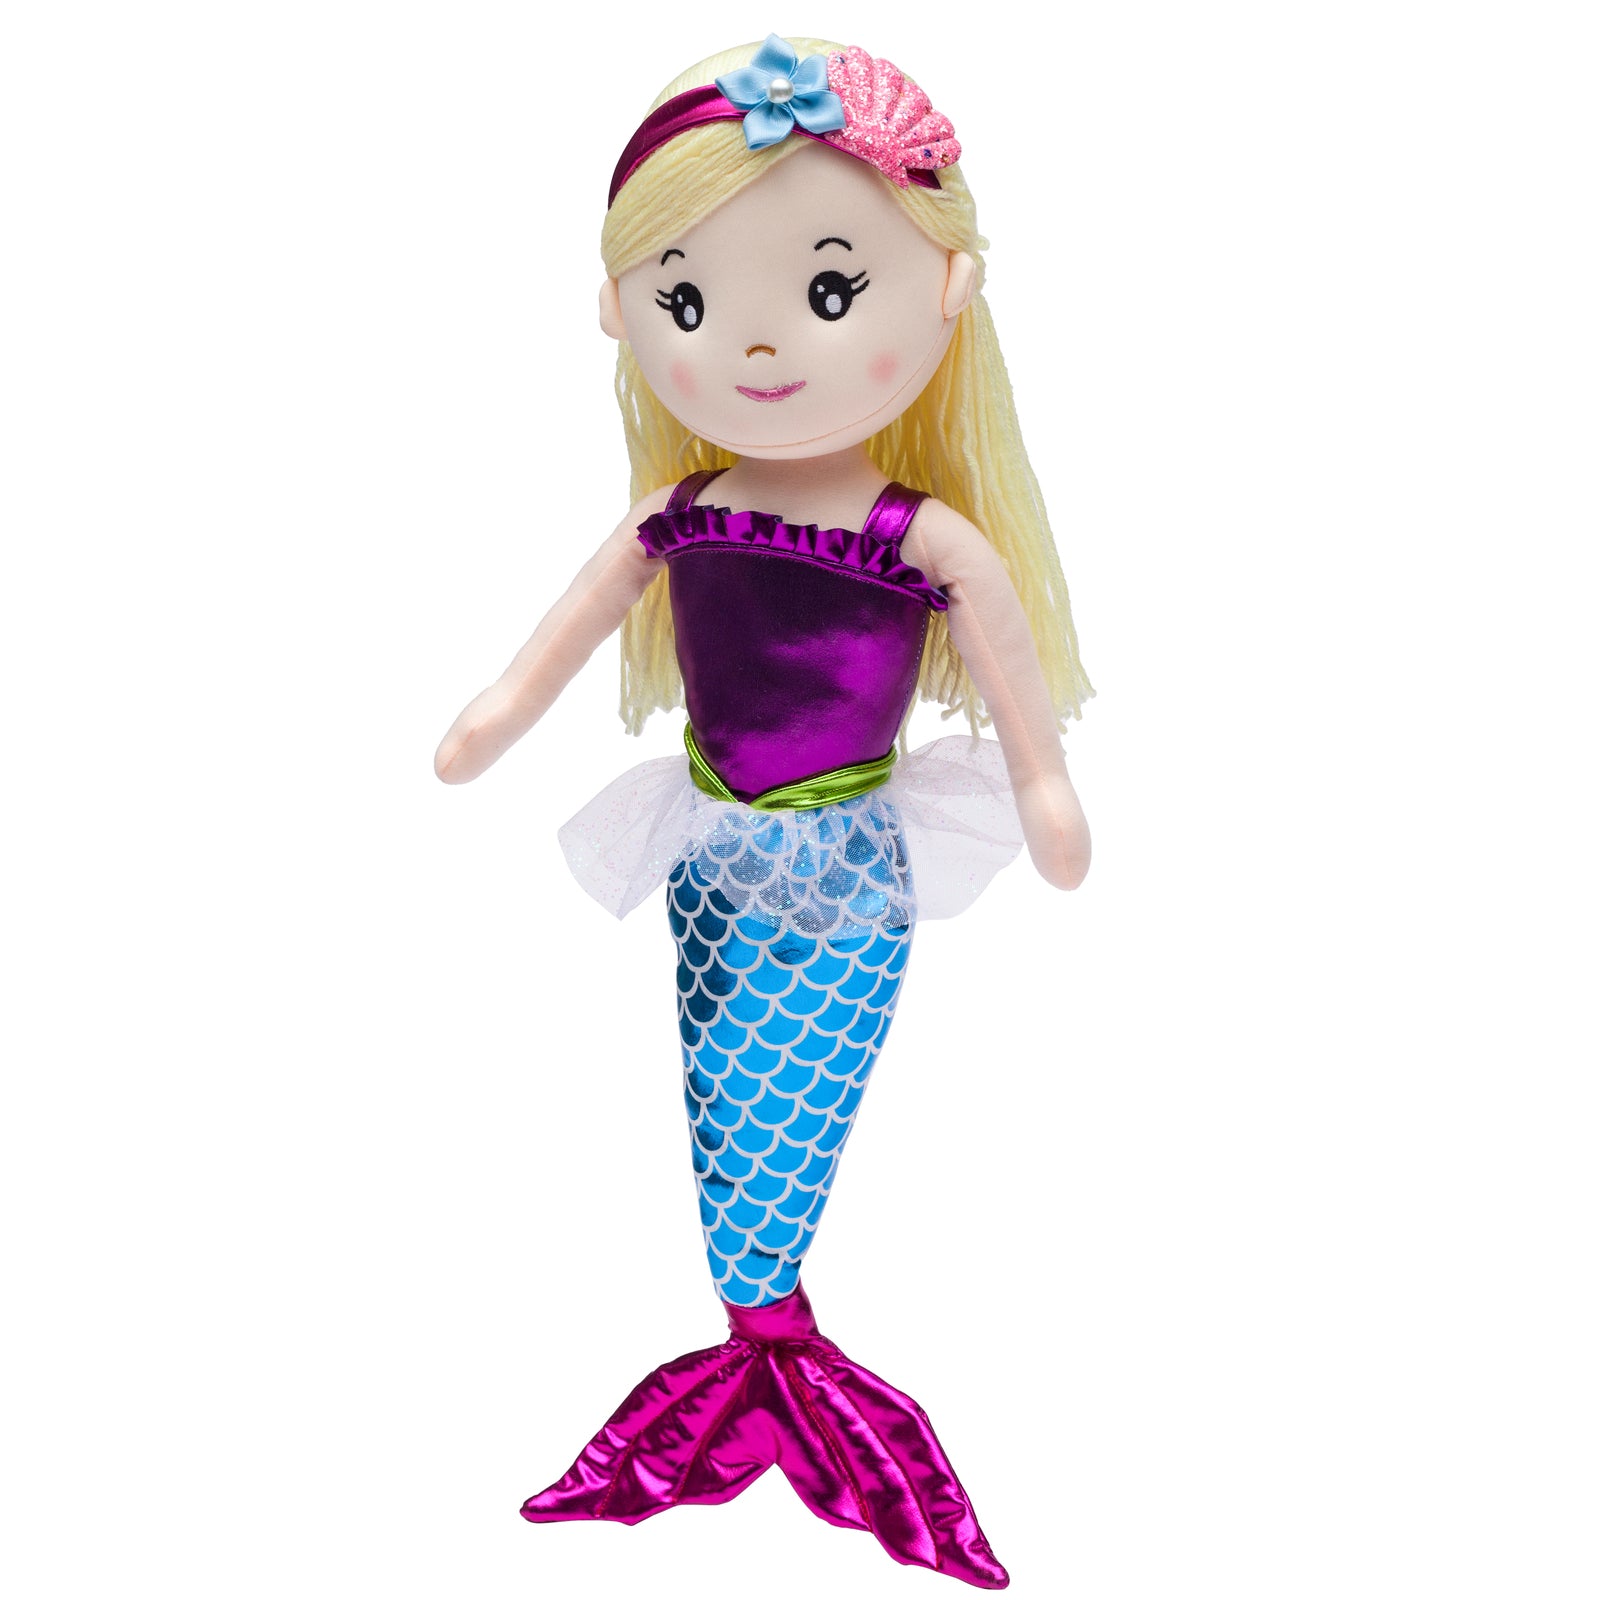 Marina Mermaid Doll - Blue Tail